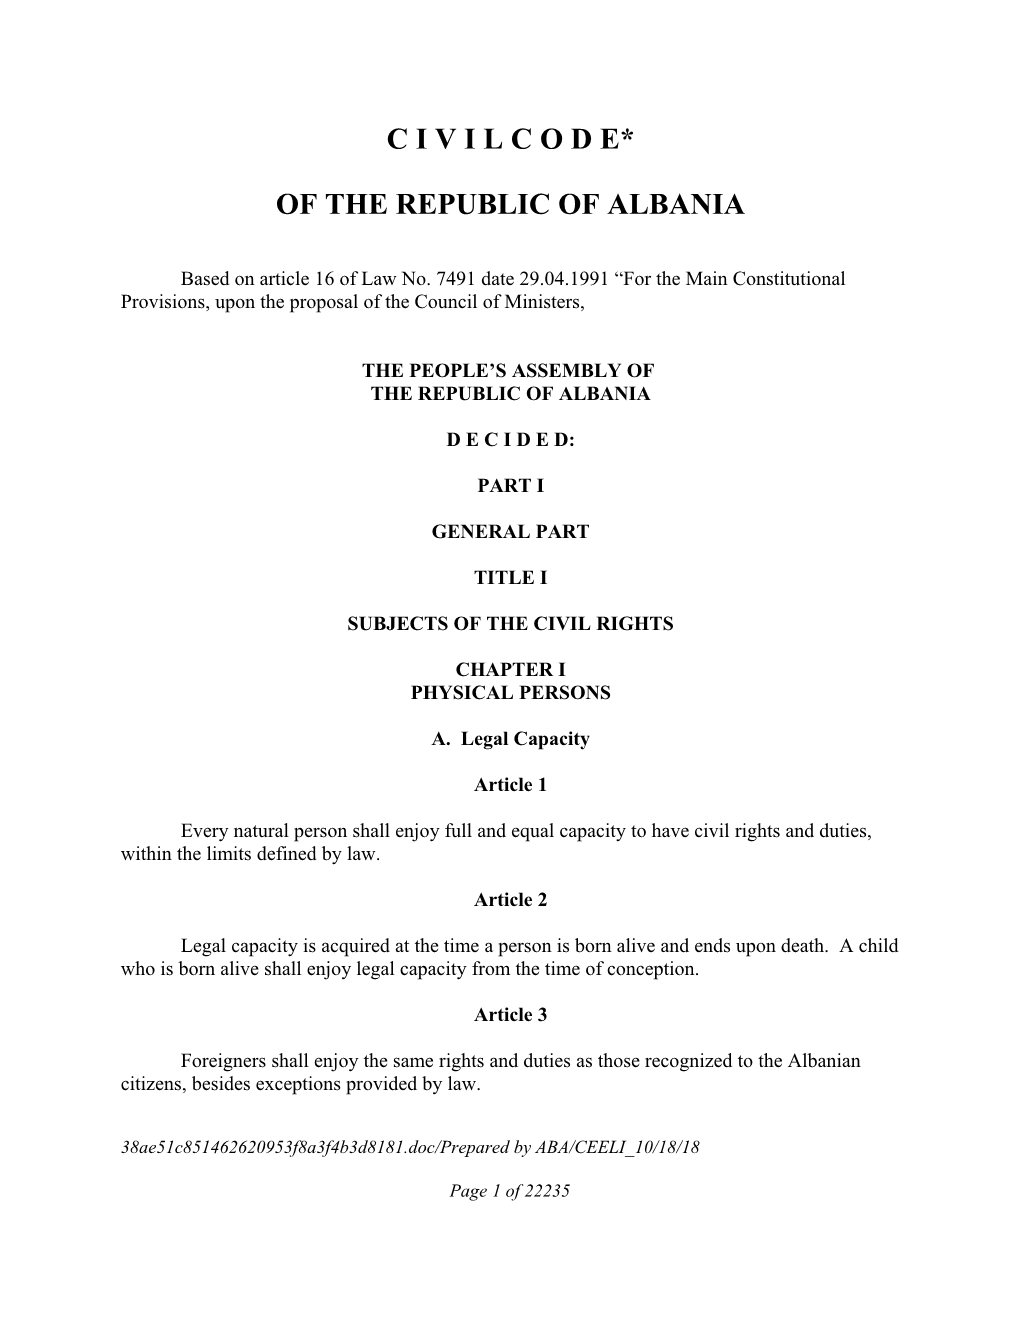 Of the Republic of Albania